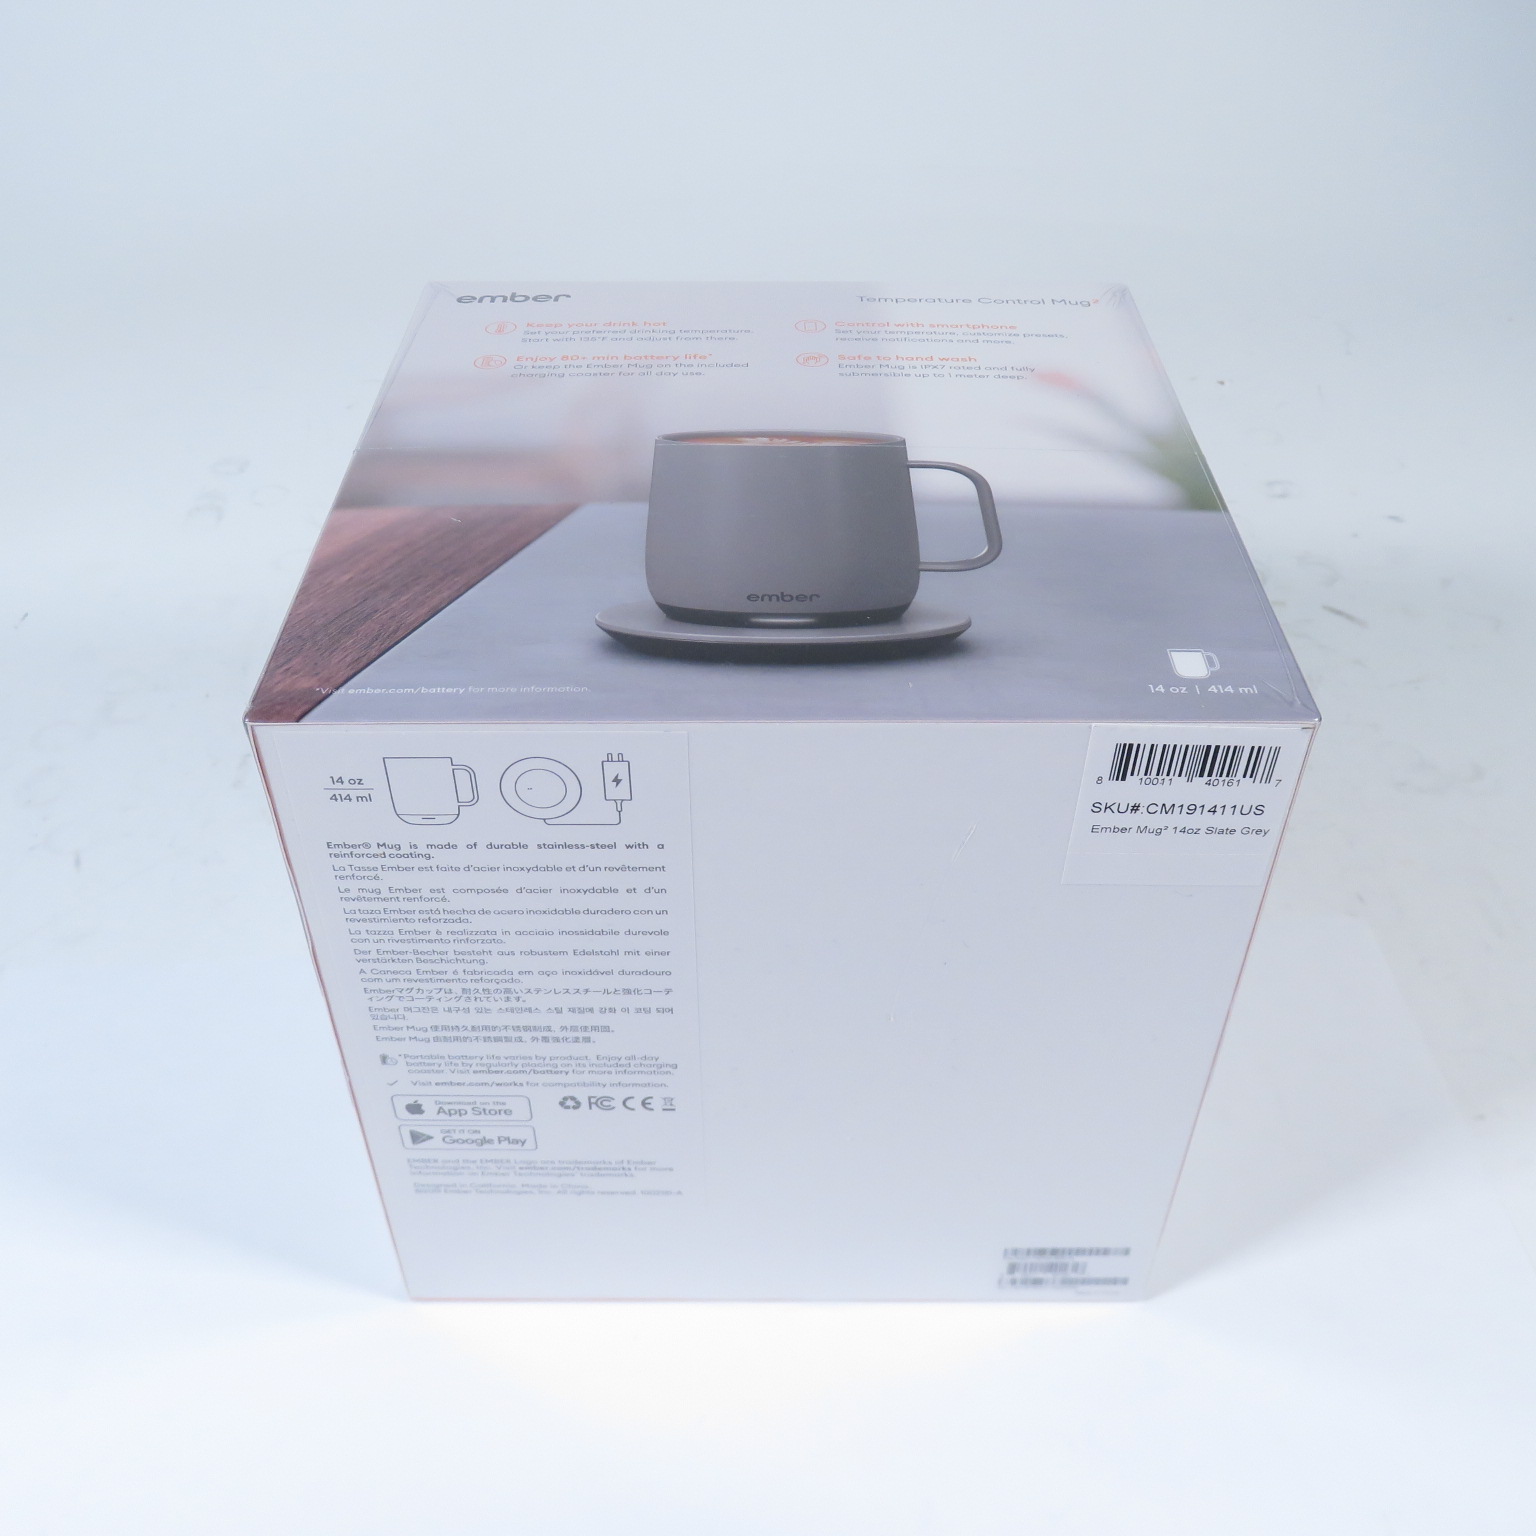 Ember Temperature Control Smart Mug 2, 14 oz, Gray, 80-min Battery